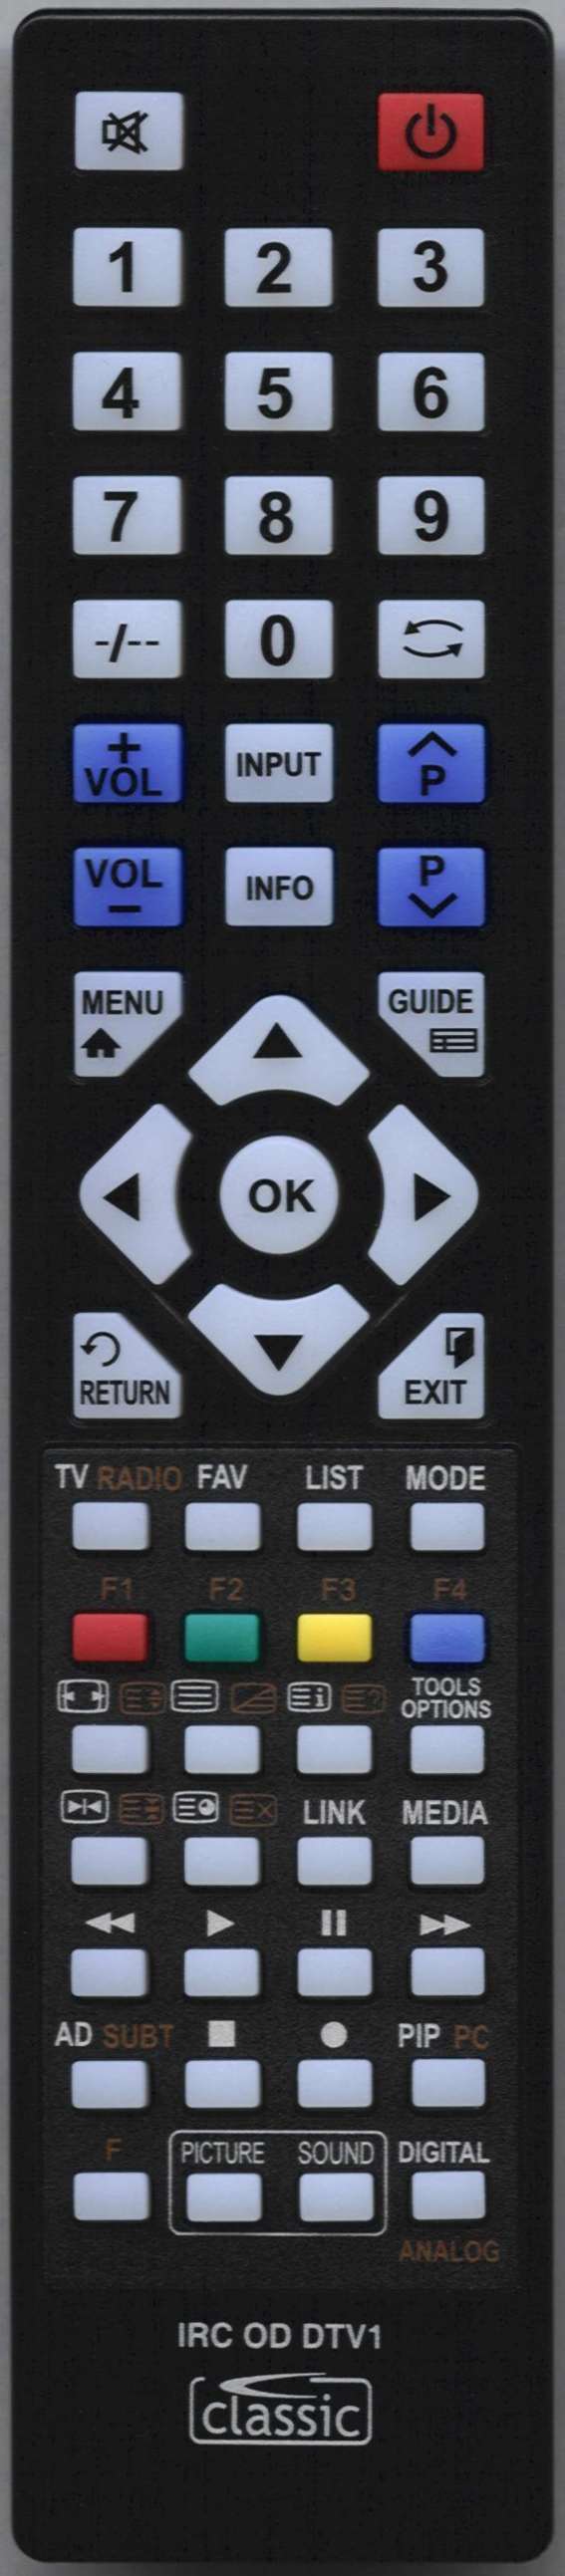 SONY KDL-32WE613 Remote Control Alternative